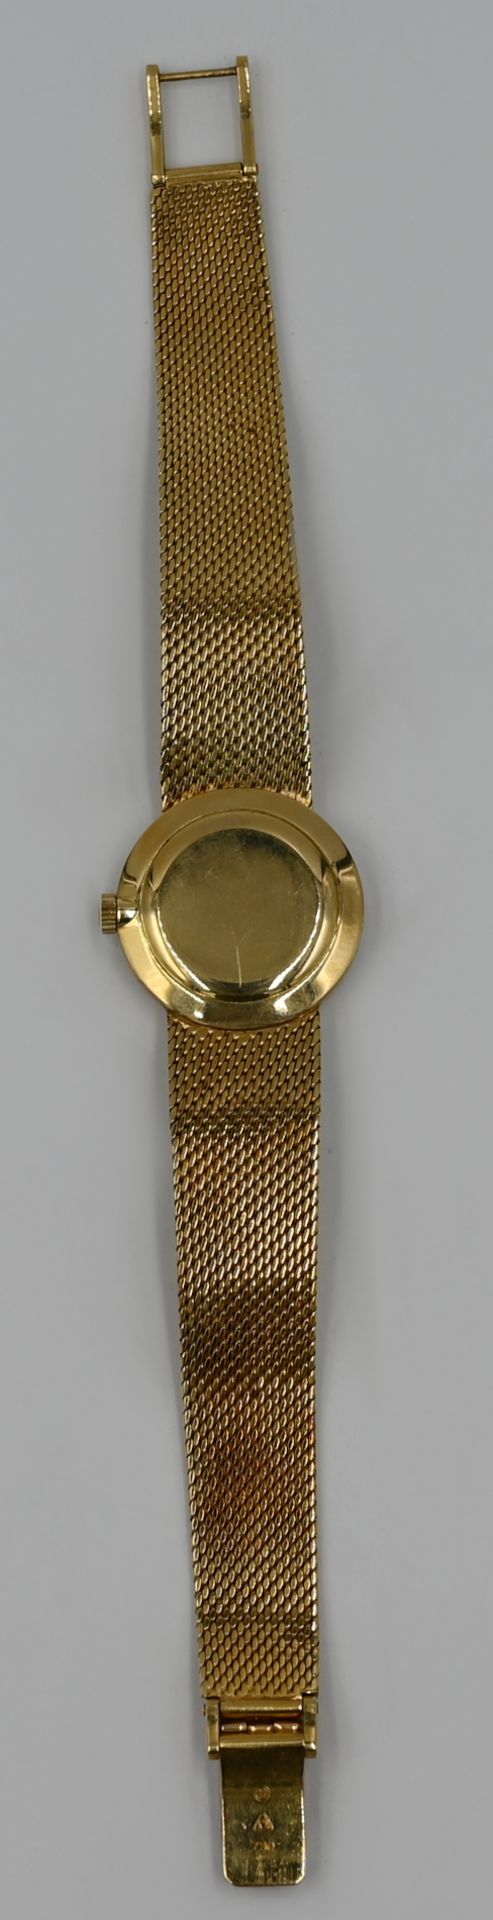 1 Damenarmbanduhr OMEGA, GG 18ct., in Originalschatulle, fleckiges Ziffernblatt, Handaufzug, Uhr läu - Bild 3 aus 3